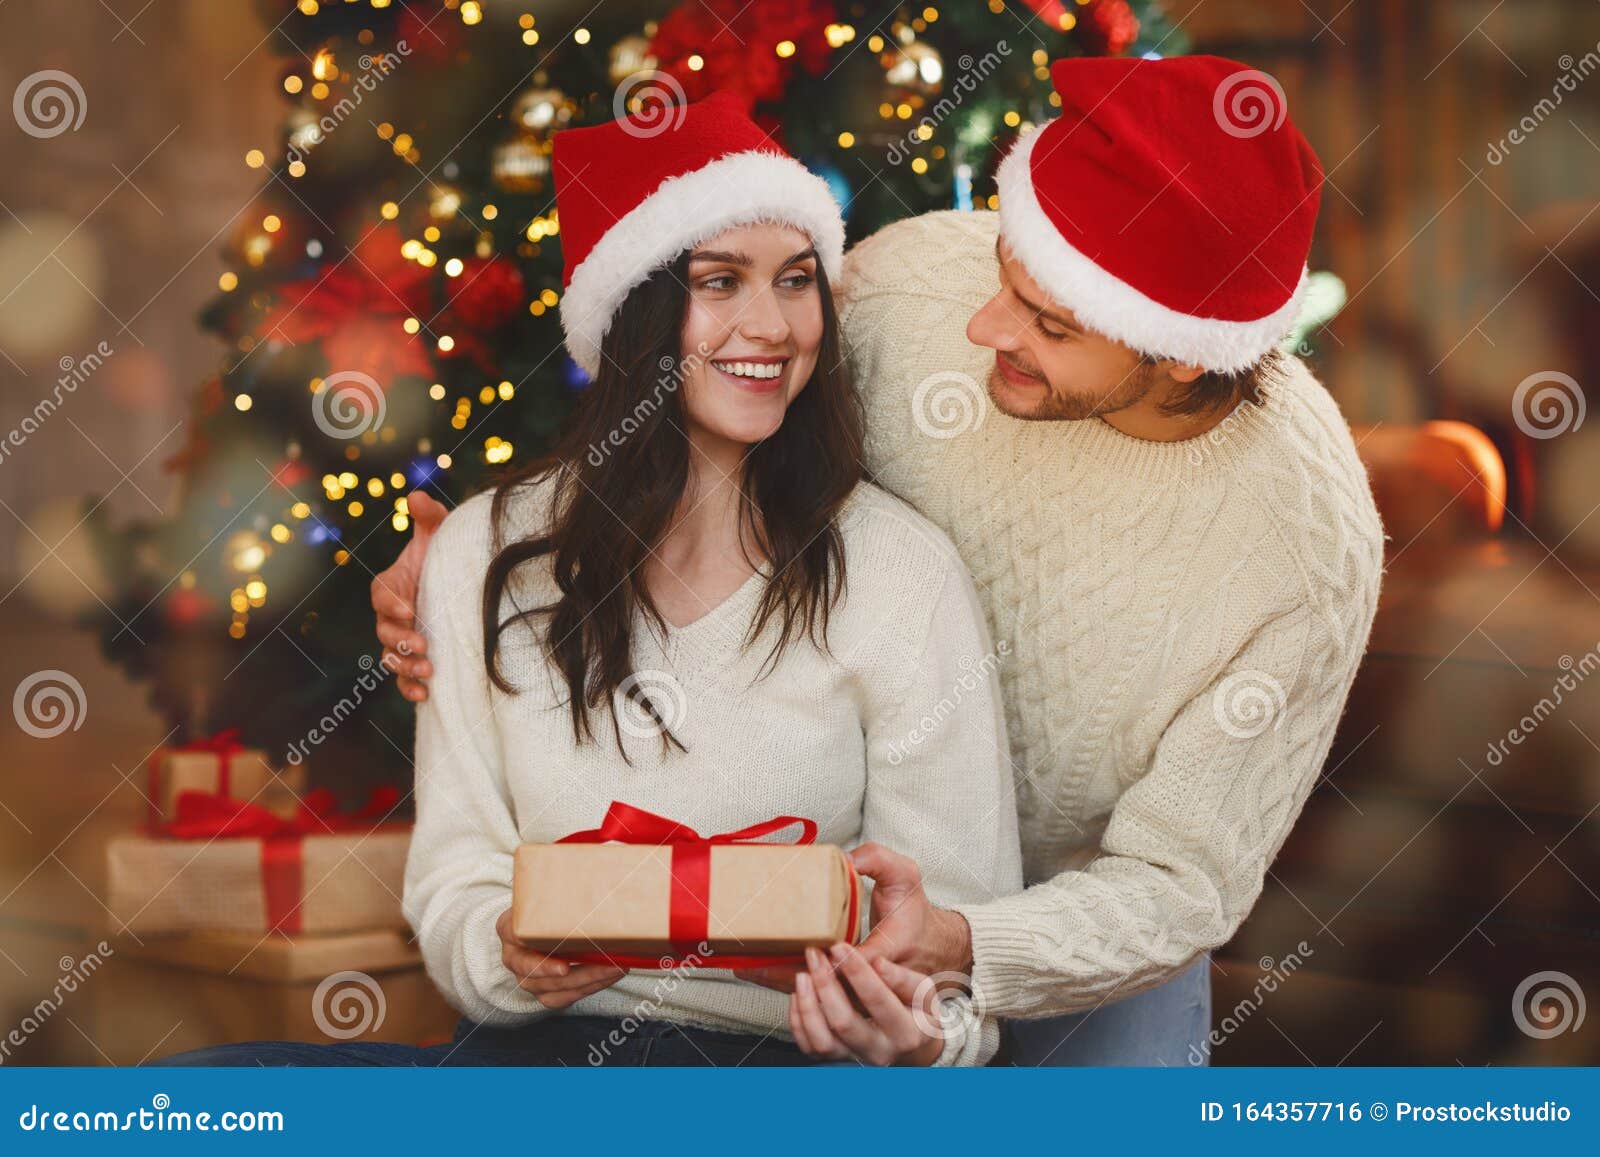 Loving Husband Giving His Wife Christmas Gift Stock Photo - Image of